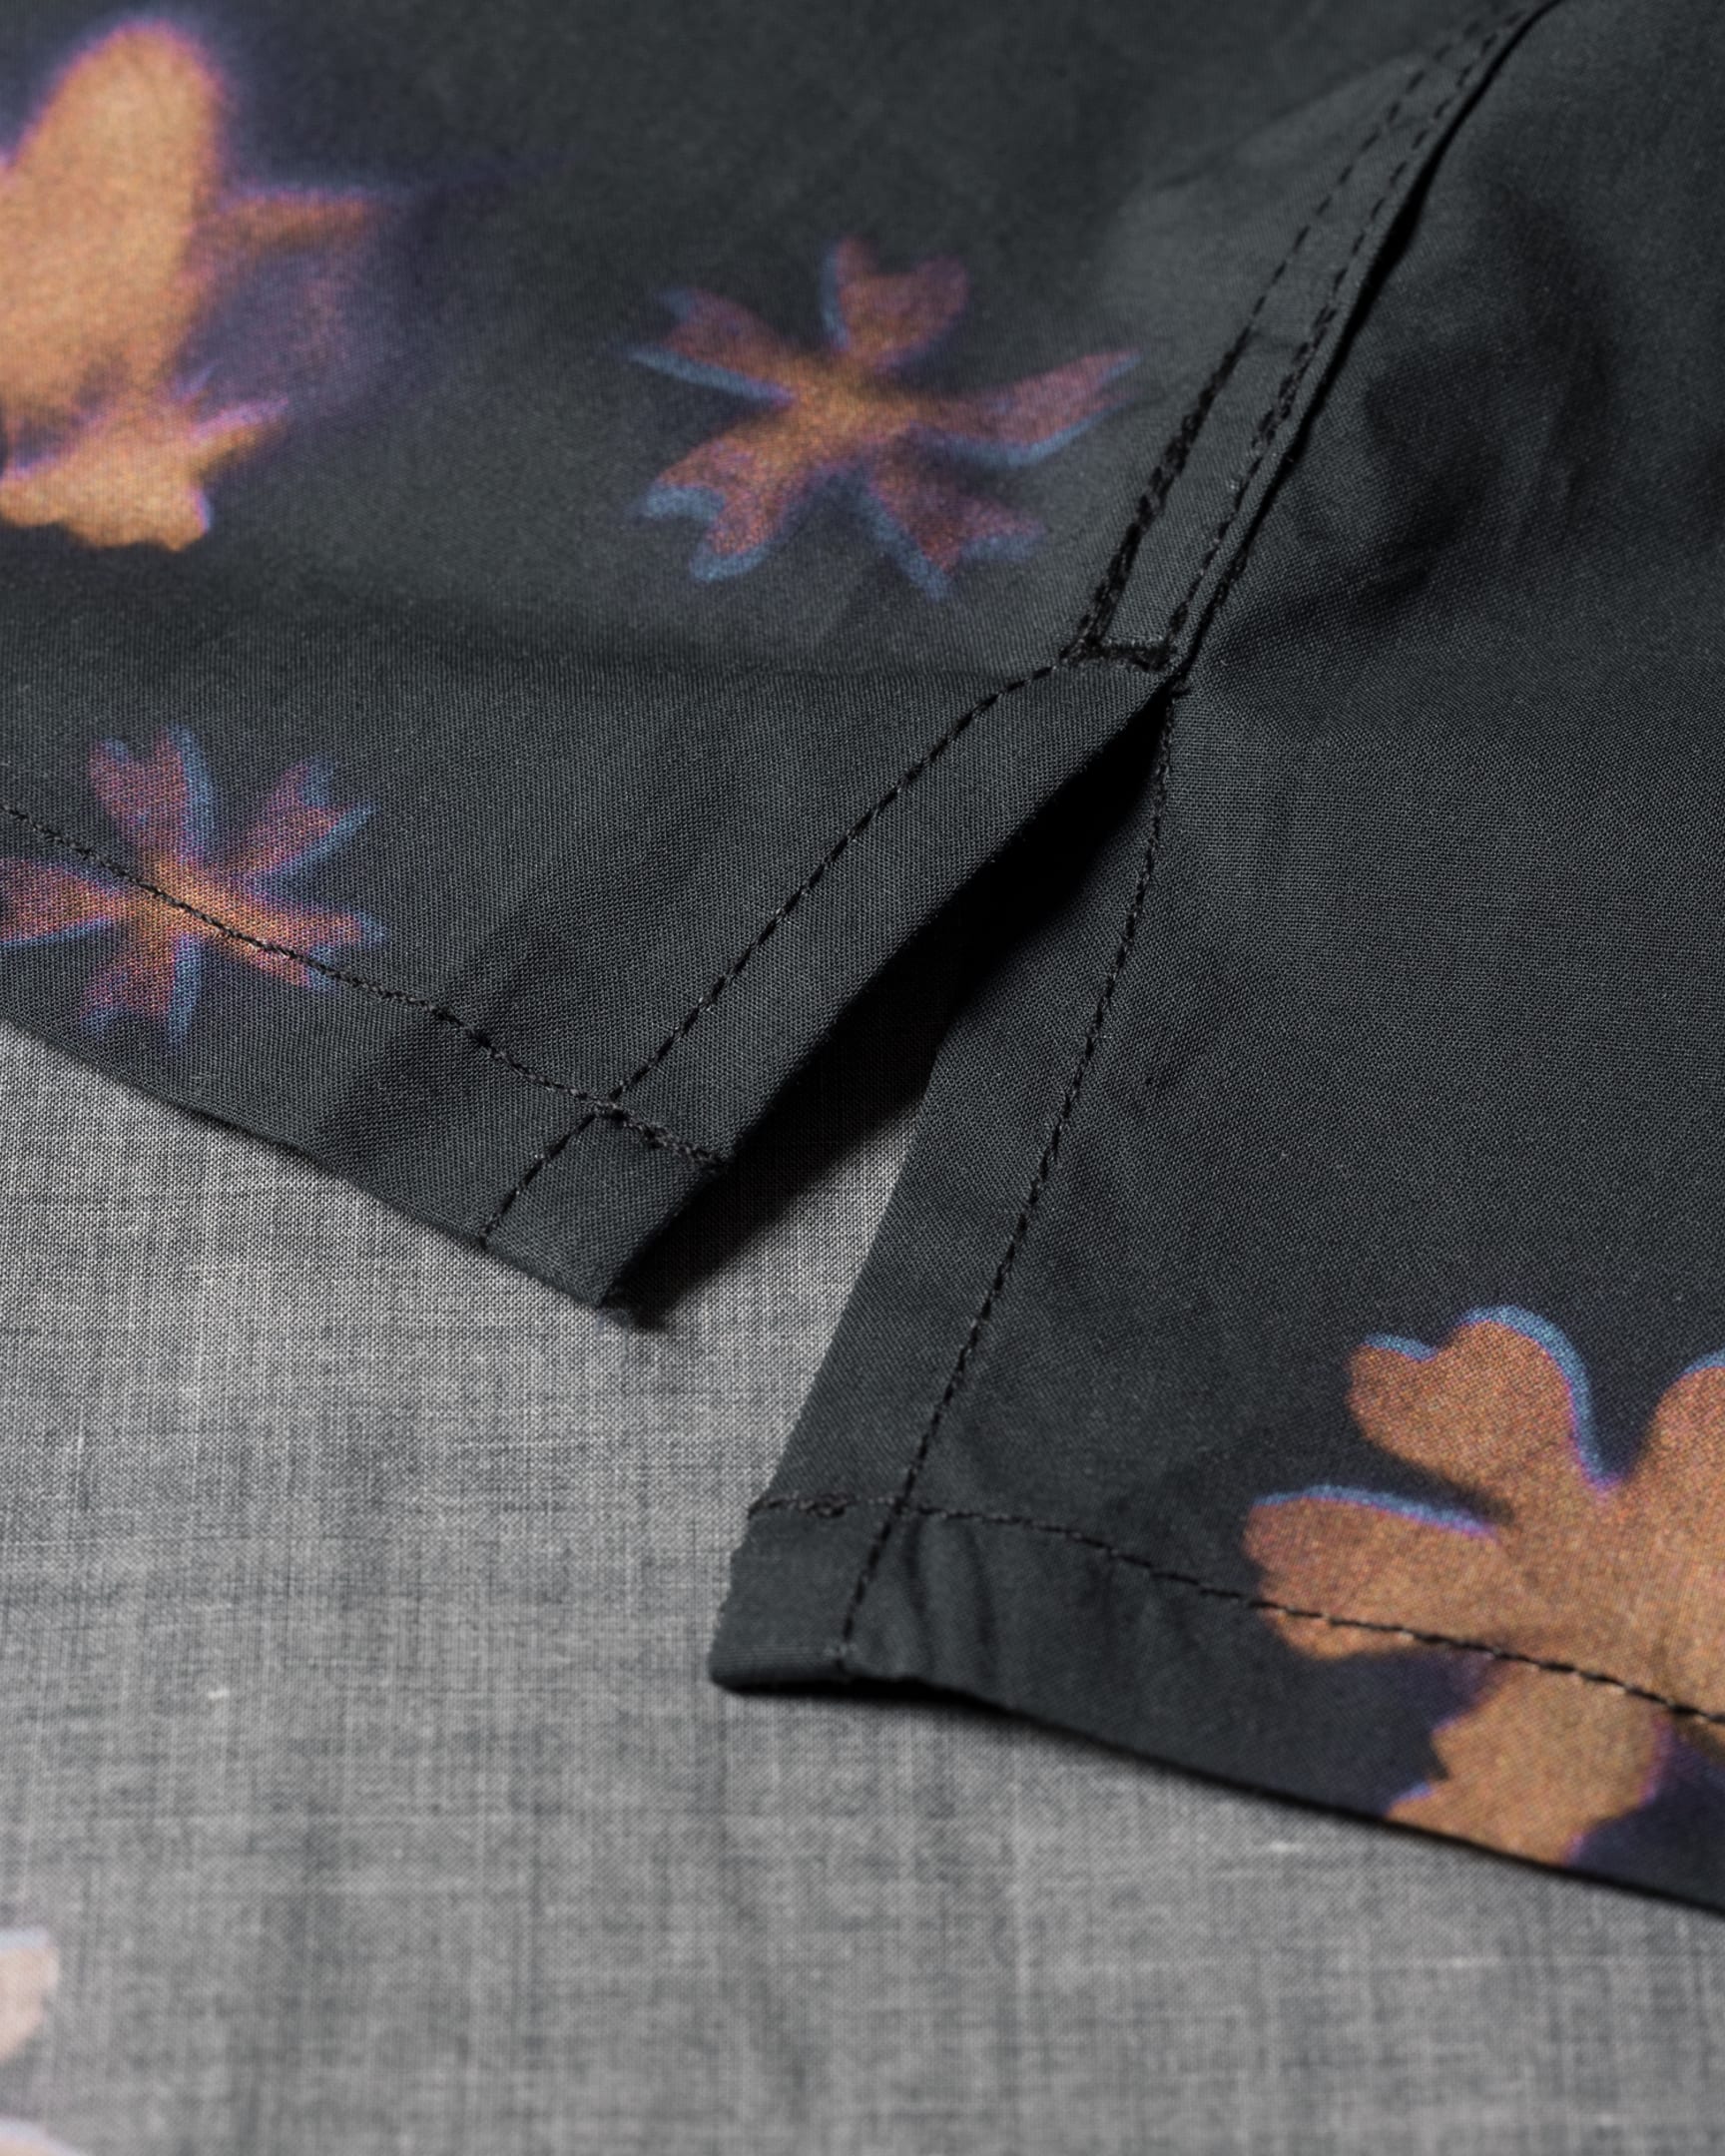 Detail View - Black 'Floral' Print Short-Sleeve Shirt Paul Smith